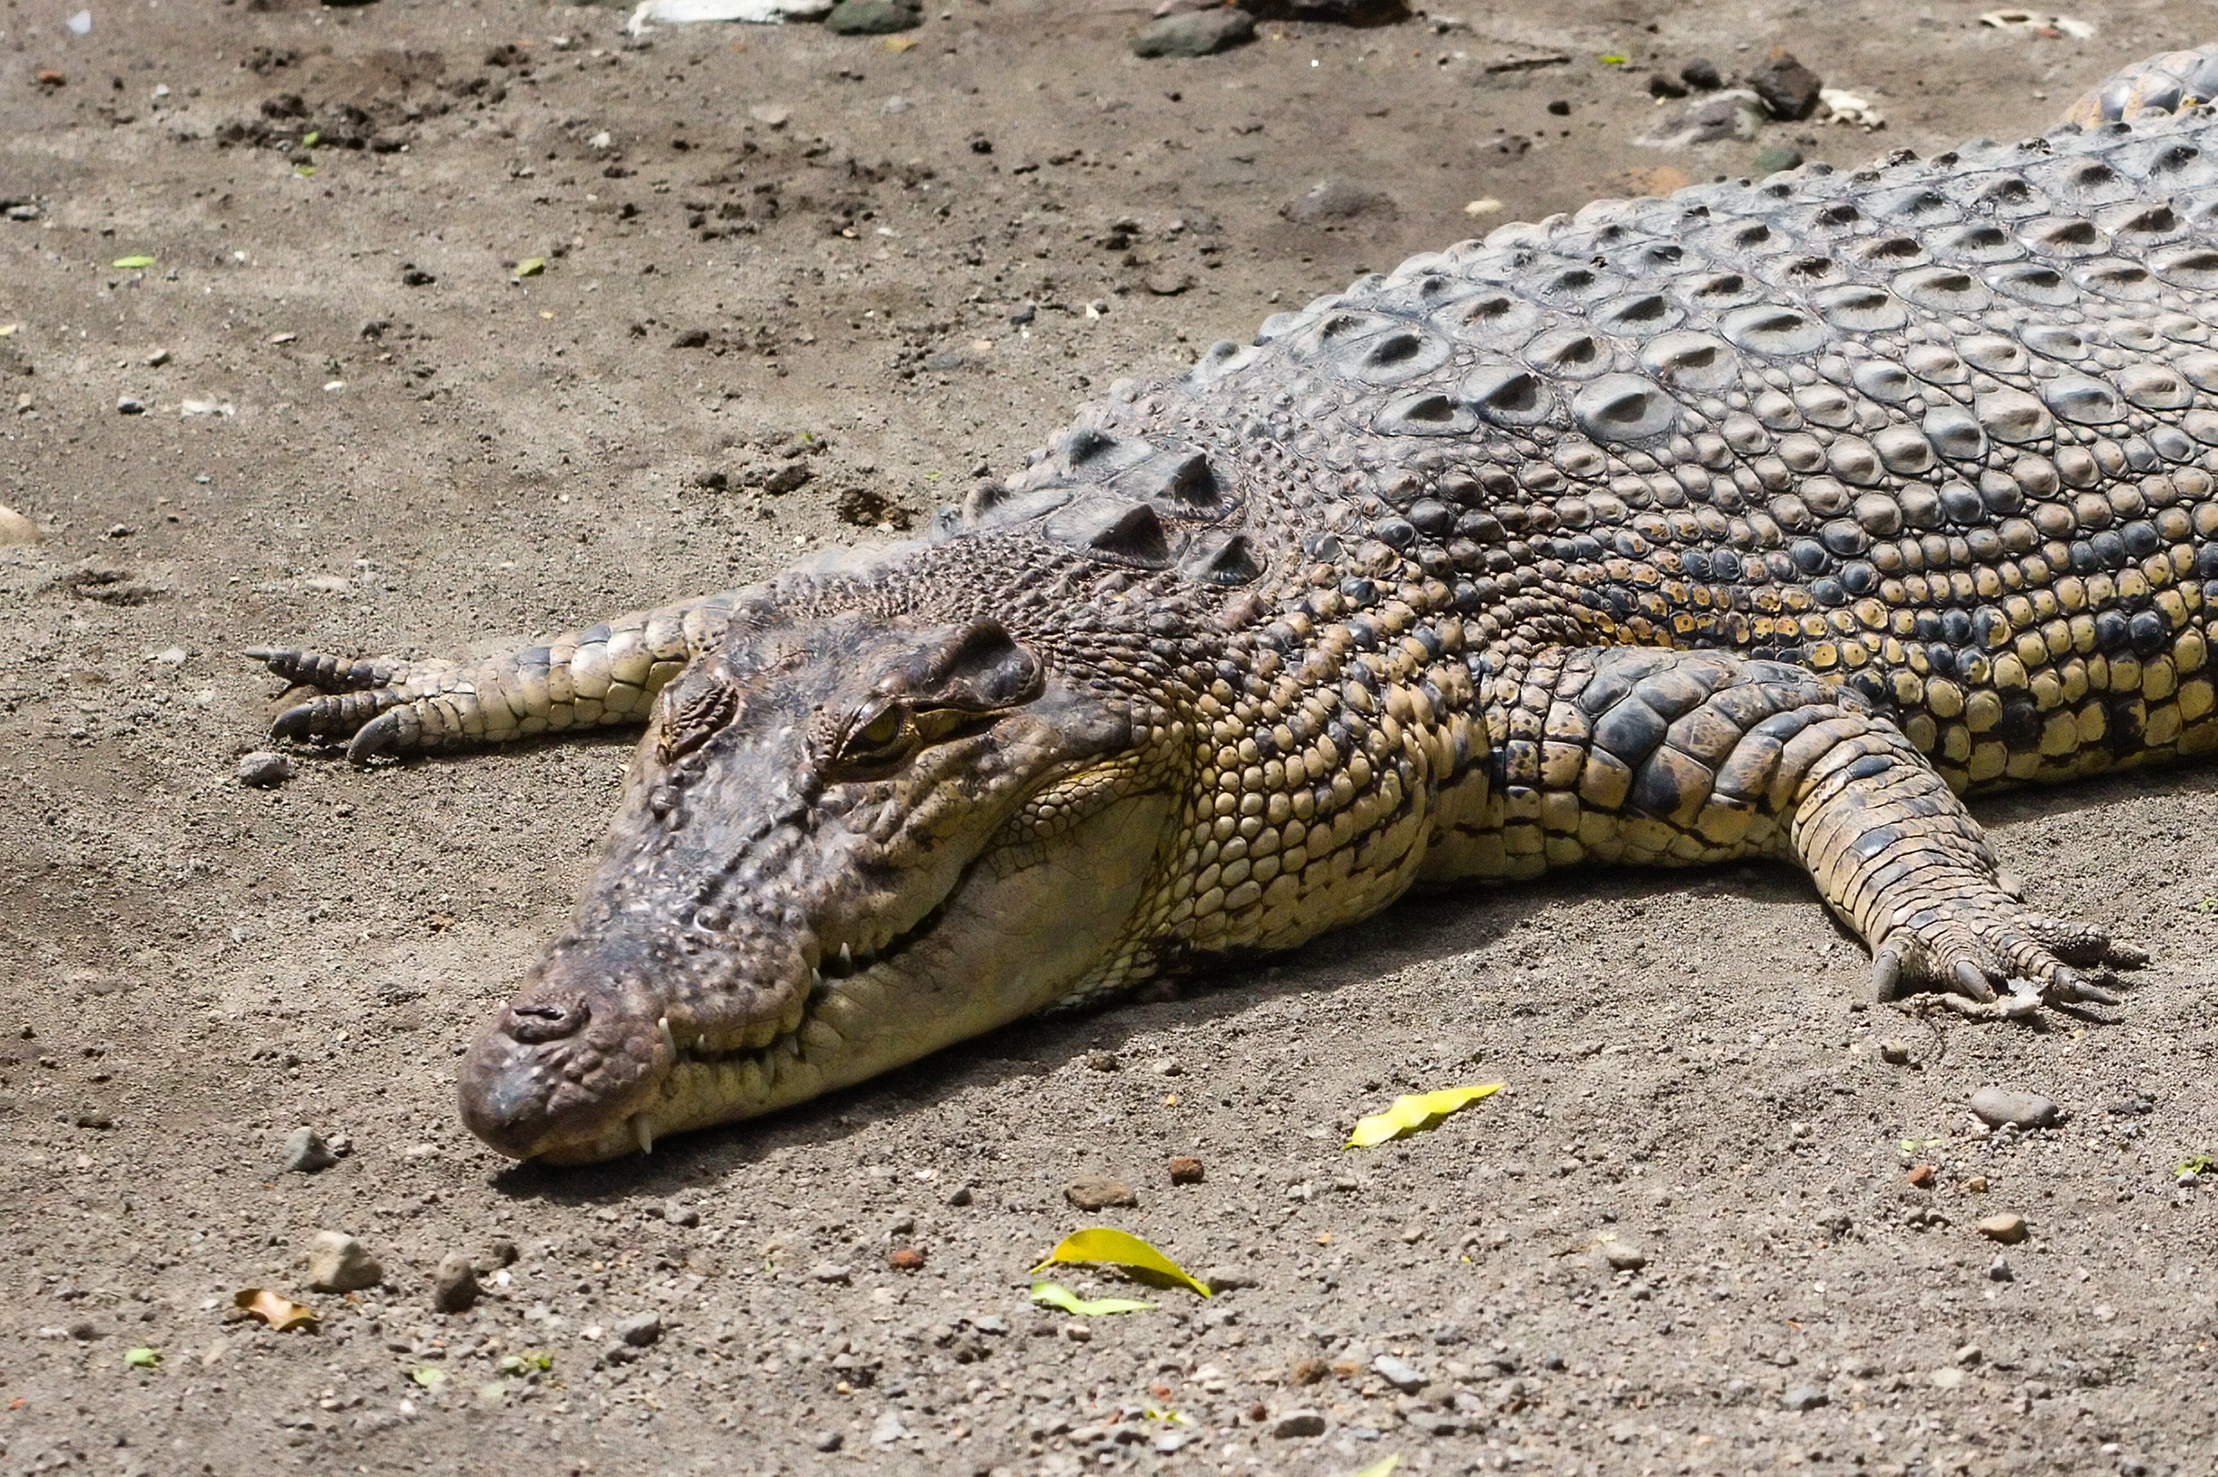 Saltwater crocodile (Crocodylus porosus), Gembira Loka Zoo, 2015-03-15 01